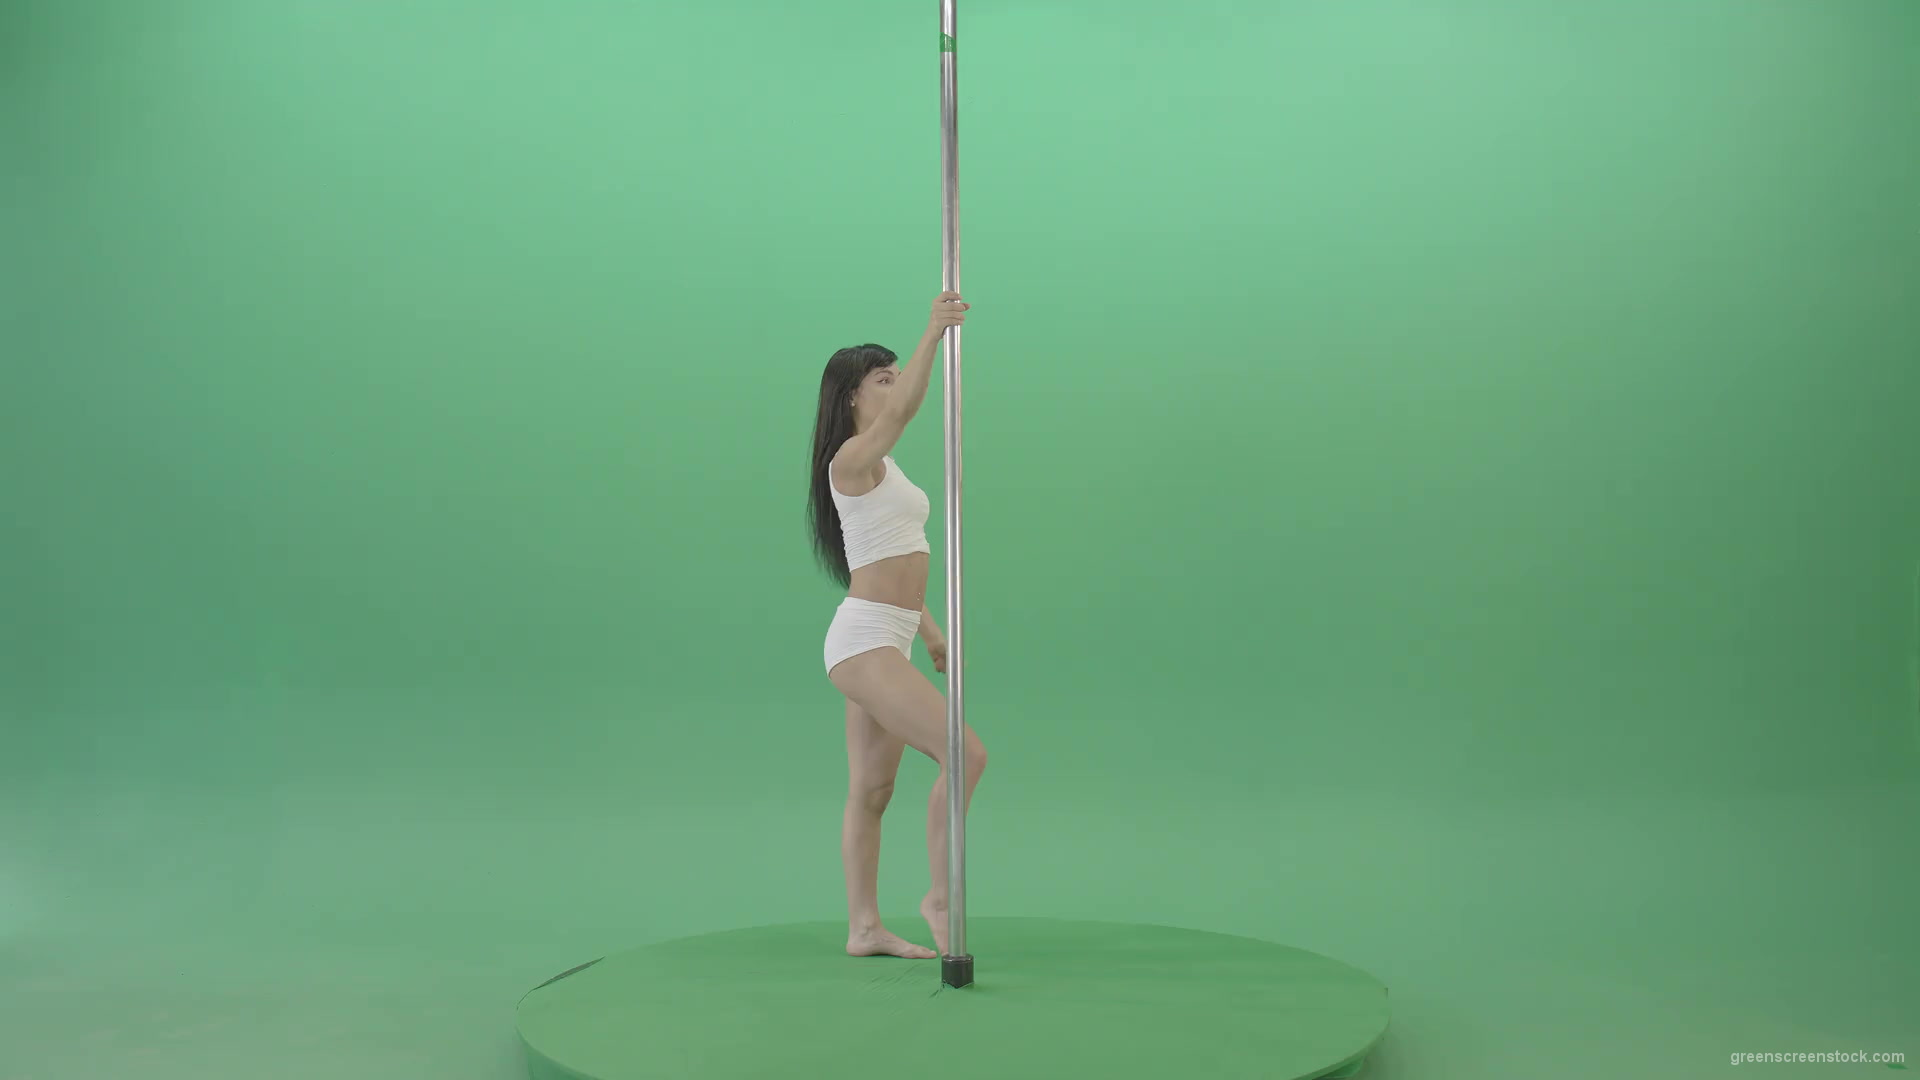 Pole-dance-trainer-girl-has-a-sport-flight-on-green-screen-4K-Video-Footage-1920_001 Green Screen Stock